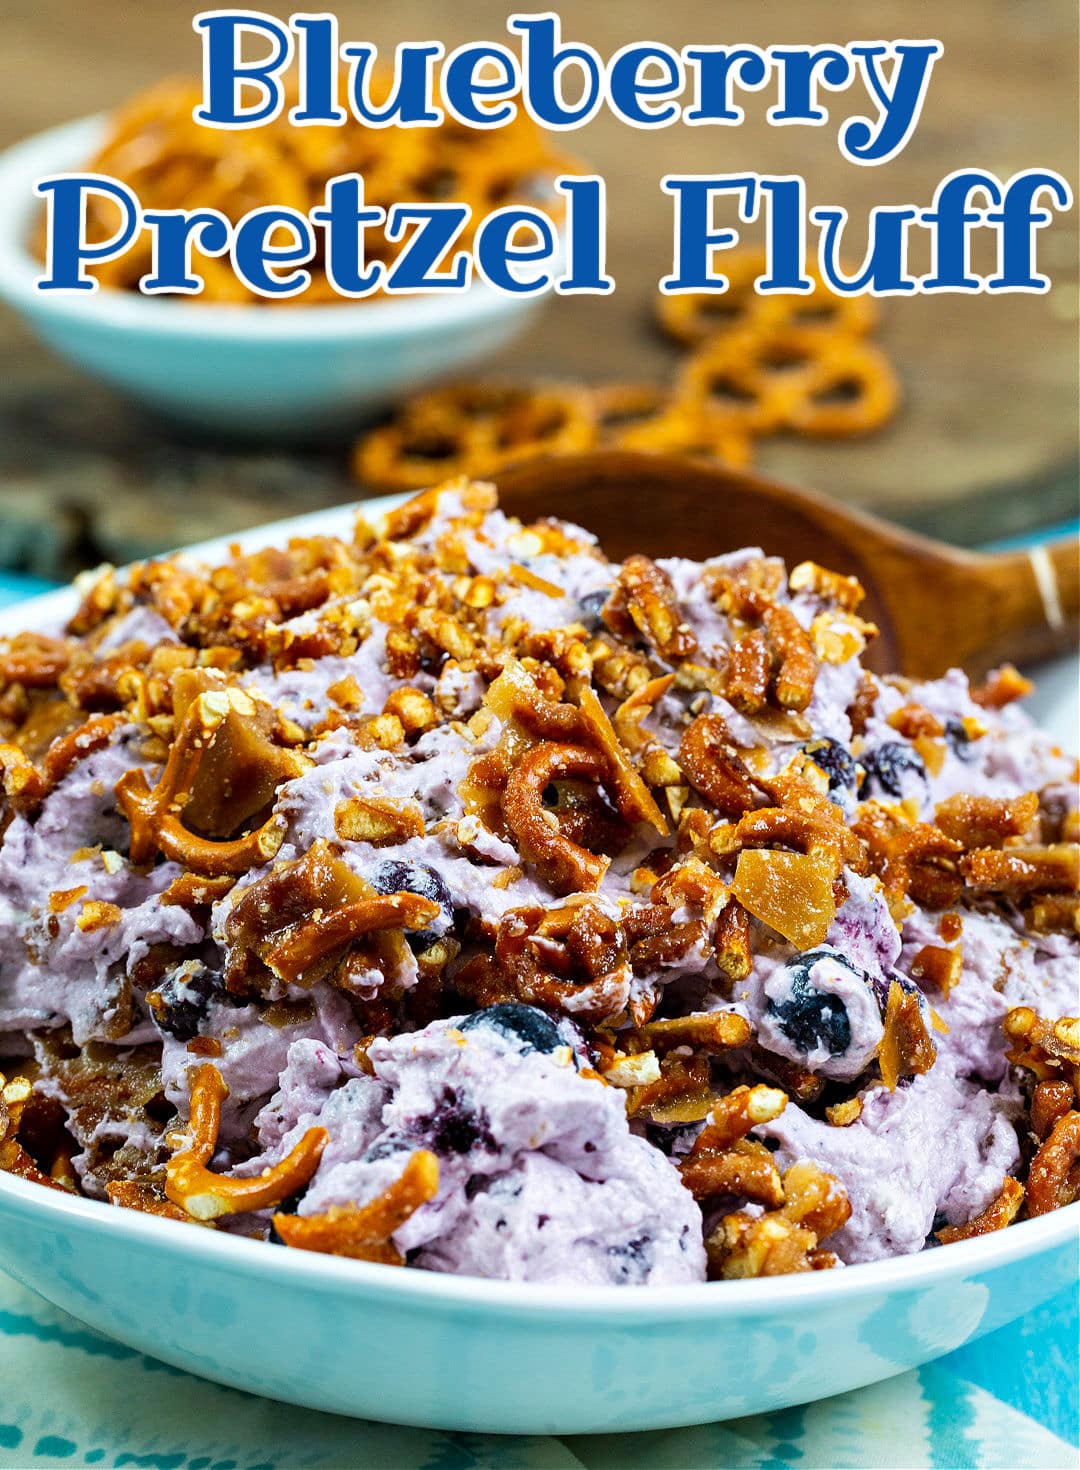 Spoon scooping blueberry pretzel fluff.